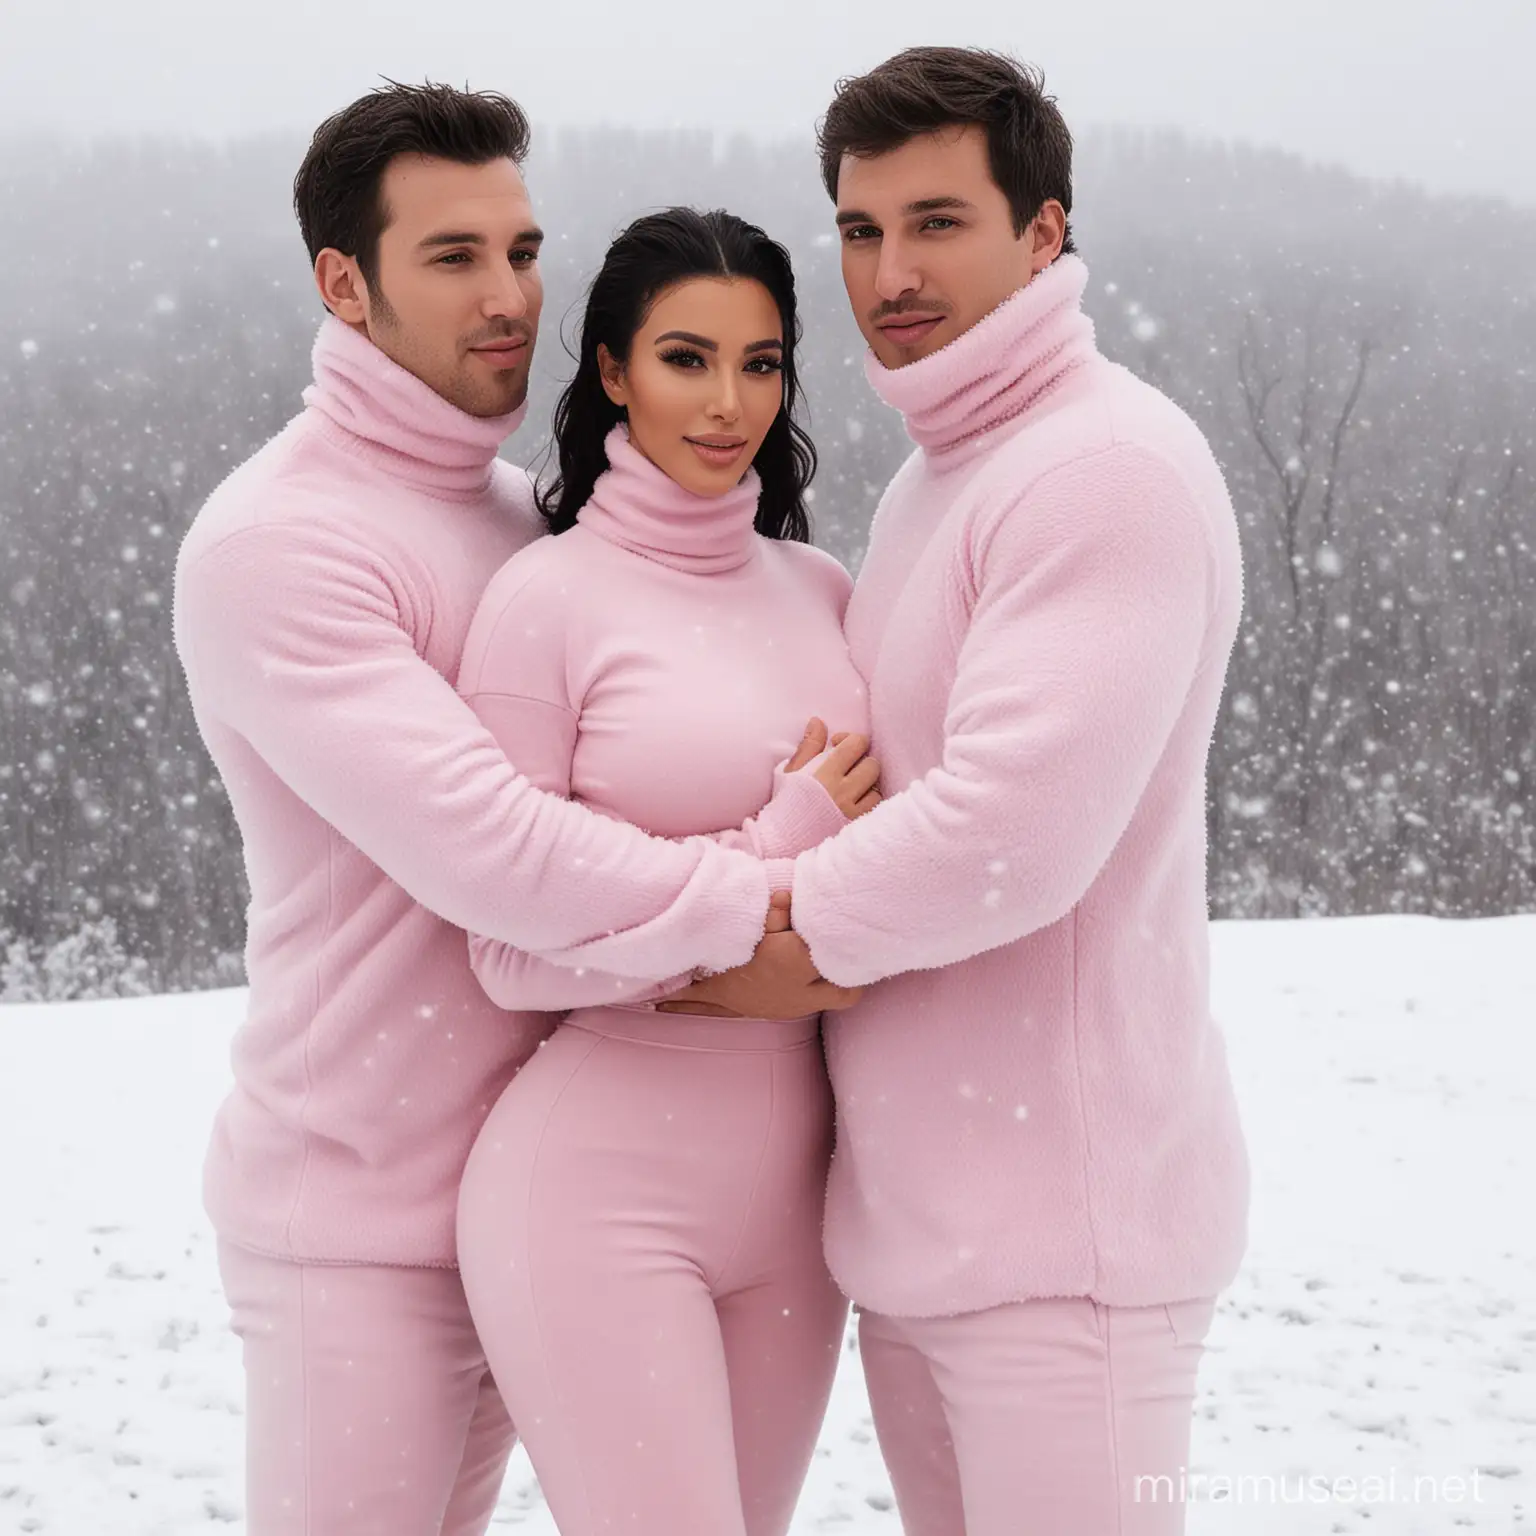 Kim Kardashian Hugging Two Men in Fuzzy Pink Turtlenecks in Snowy Setting